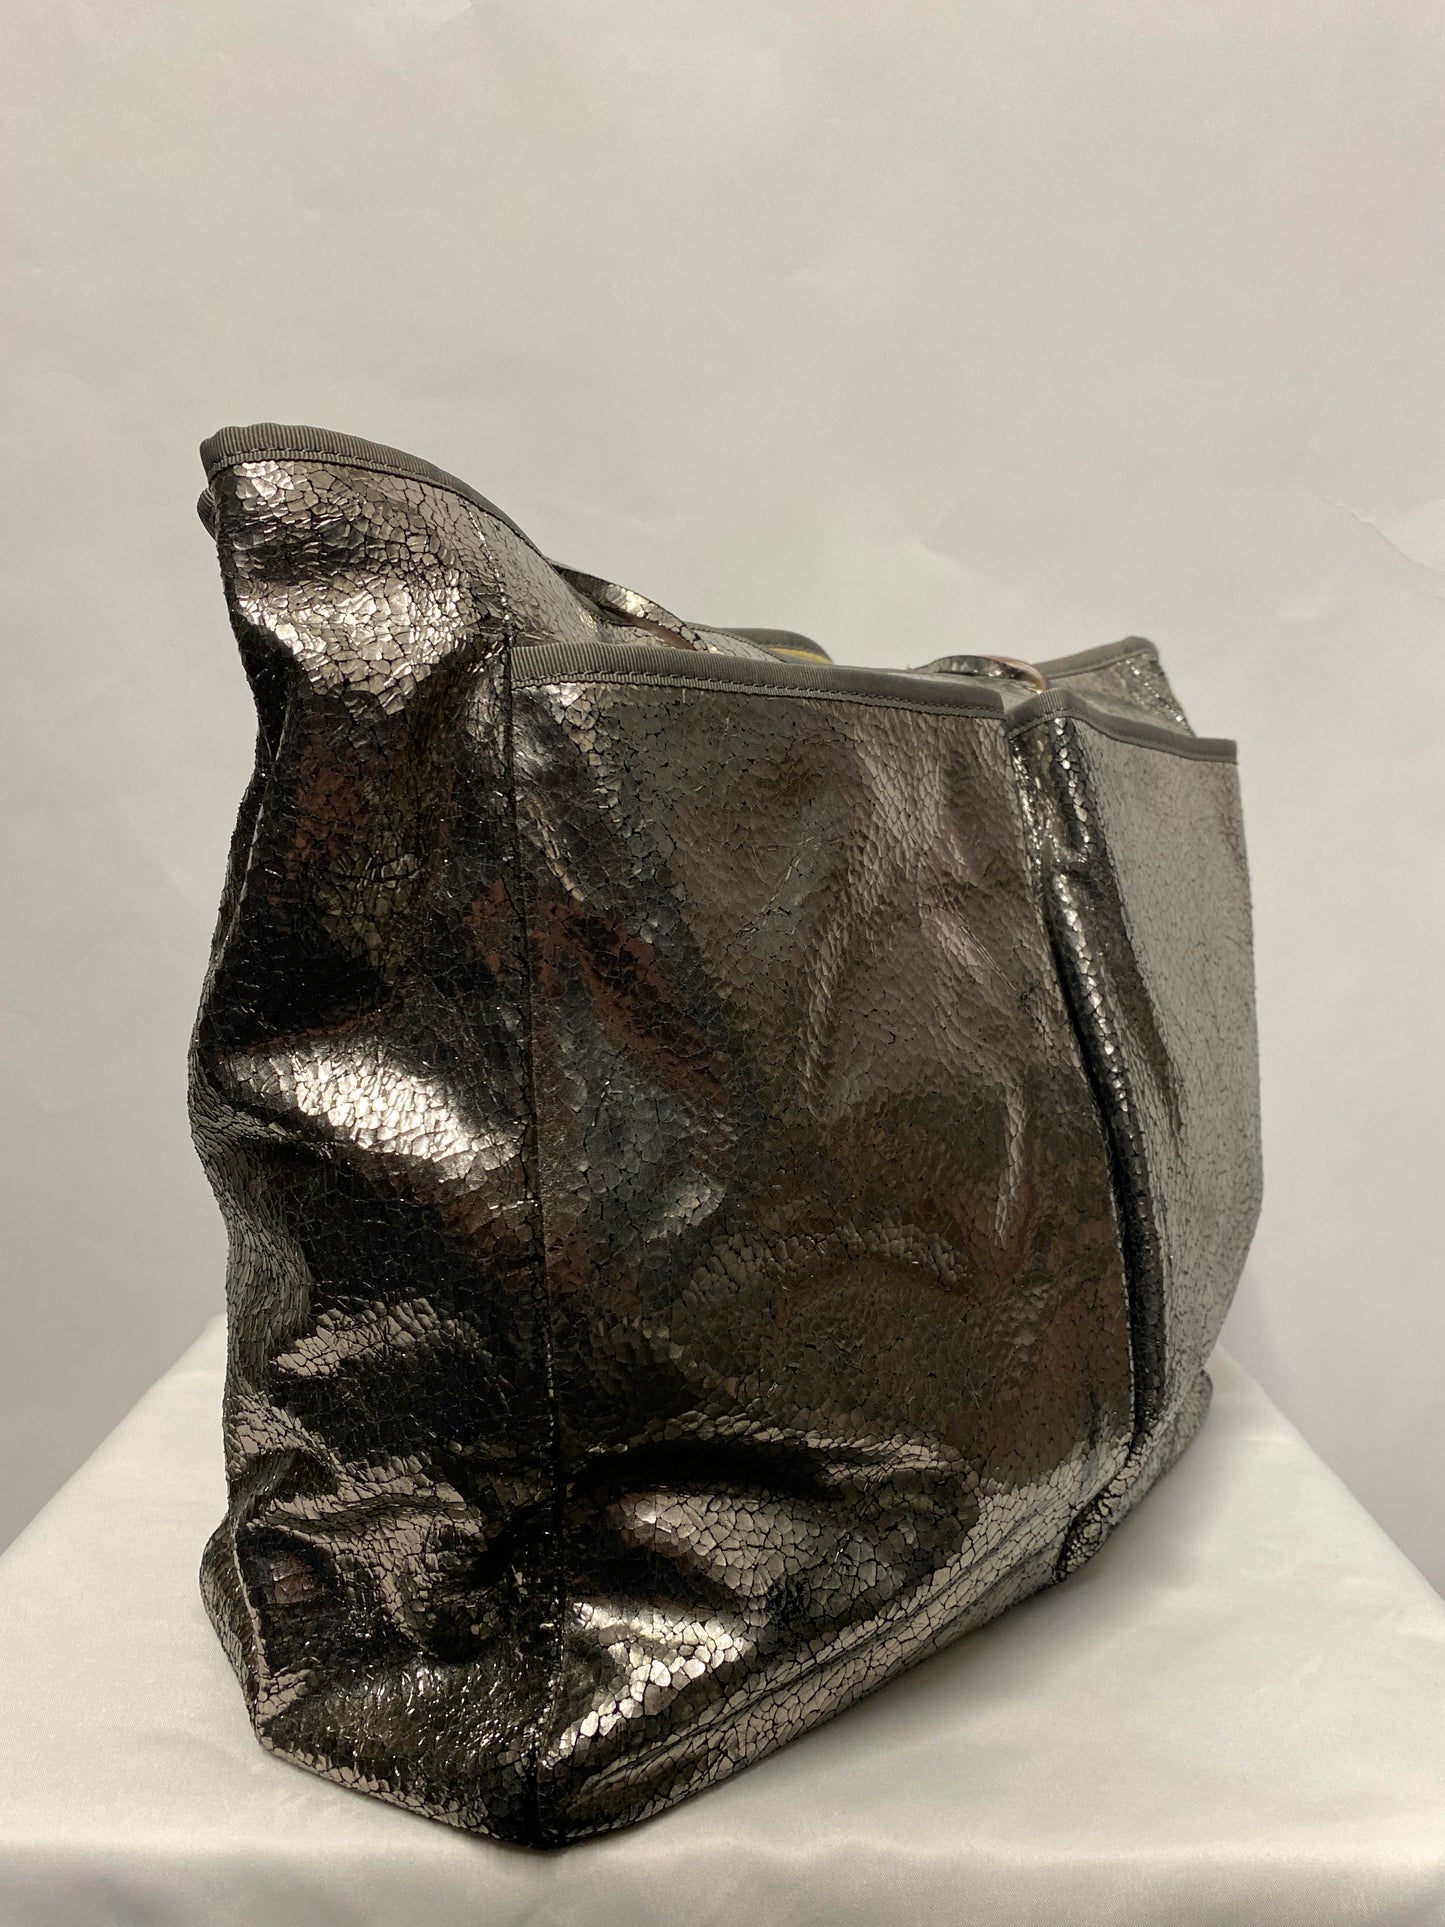 Anya Hindmarch Cracked Silver Tote Bag